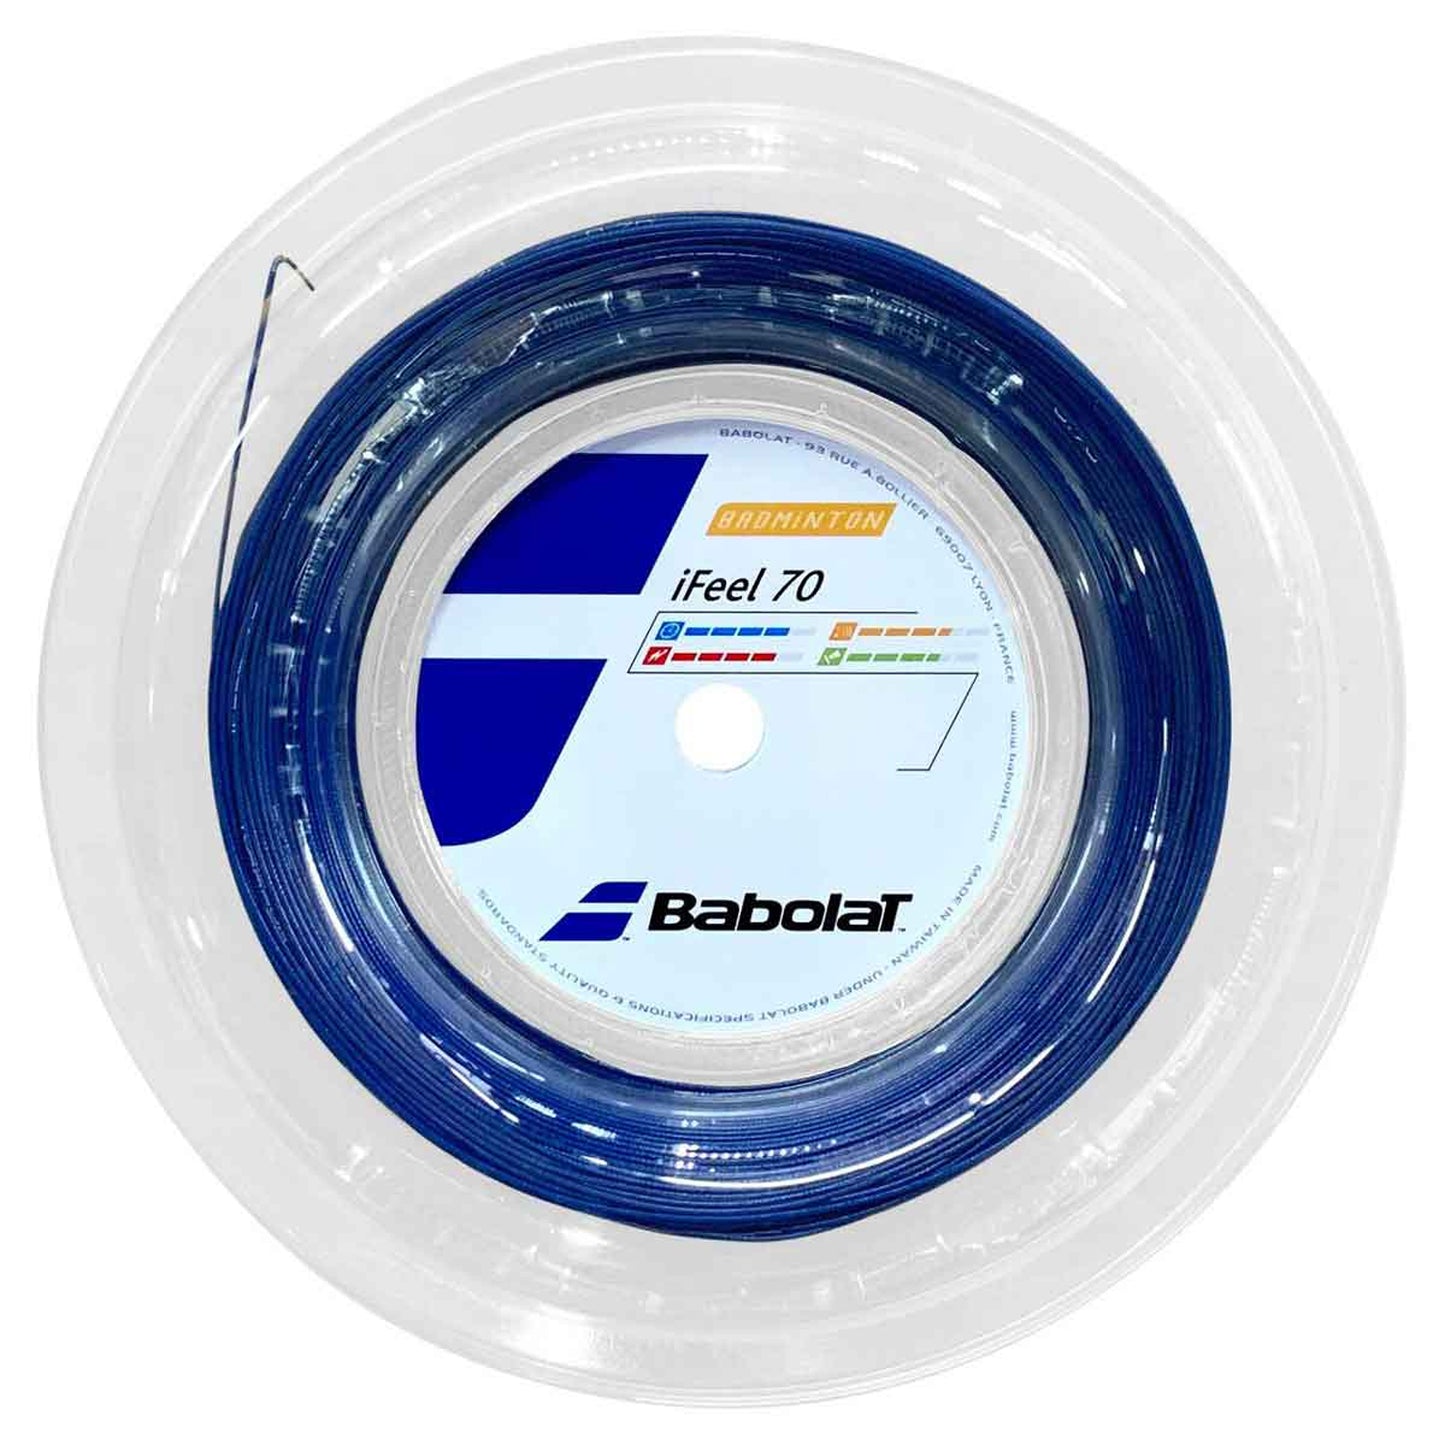 Babolat I Feel 70 Badminton String Reel, 200M - Best Price online Prokicksports.com